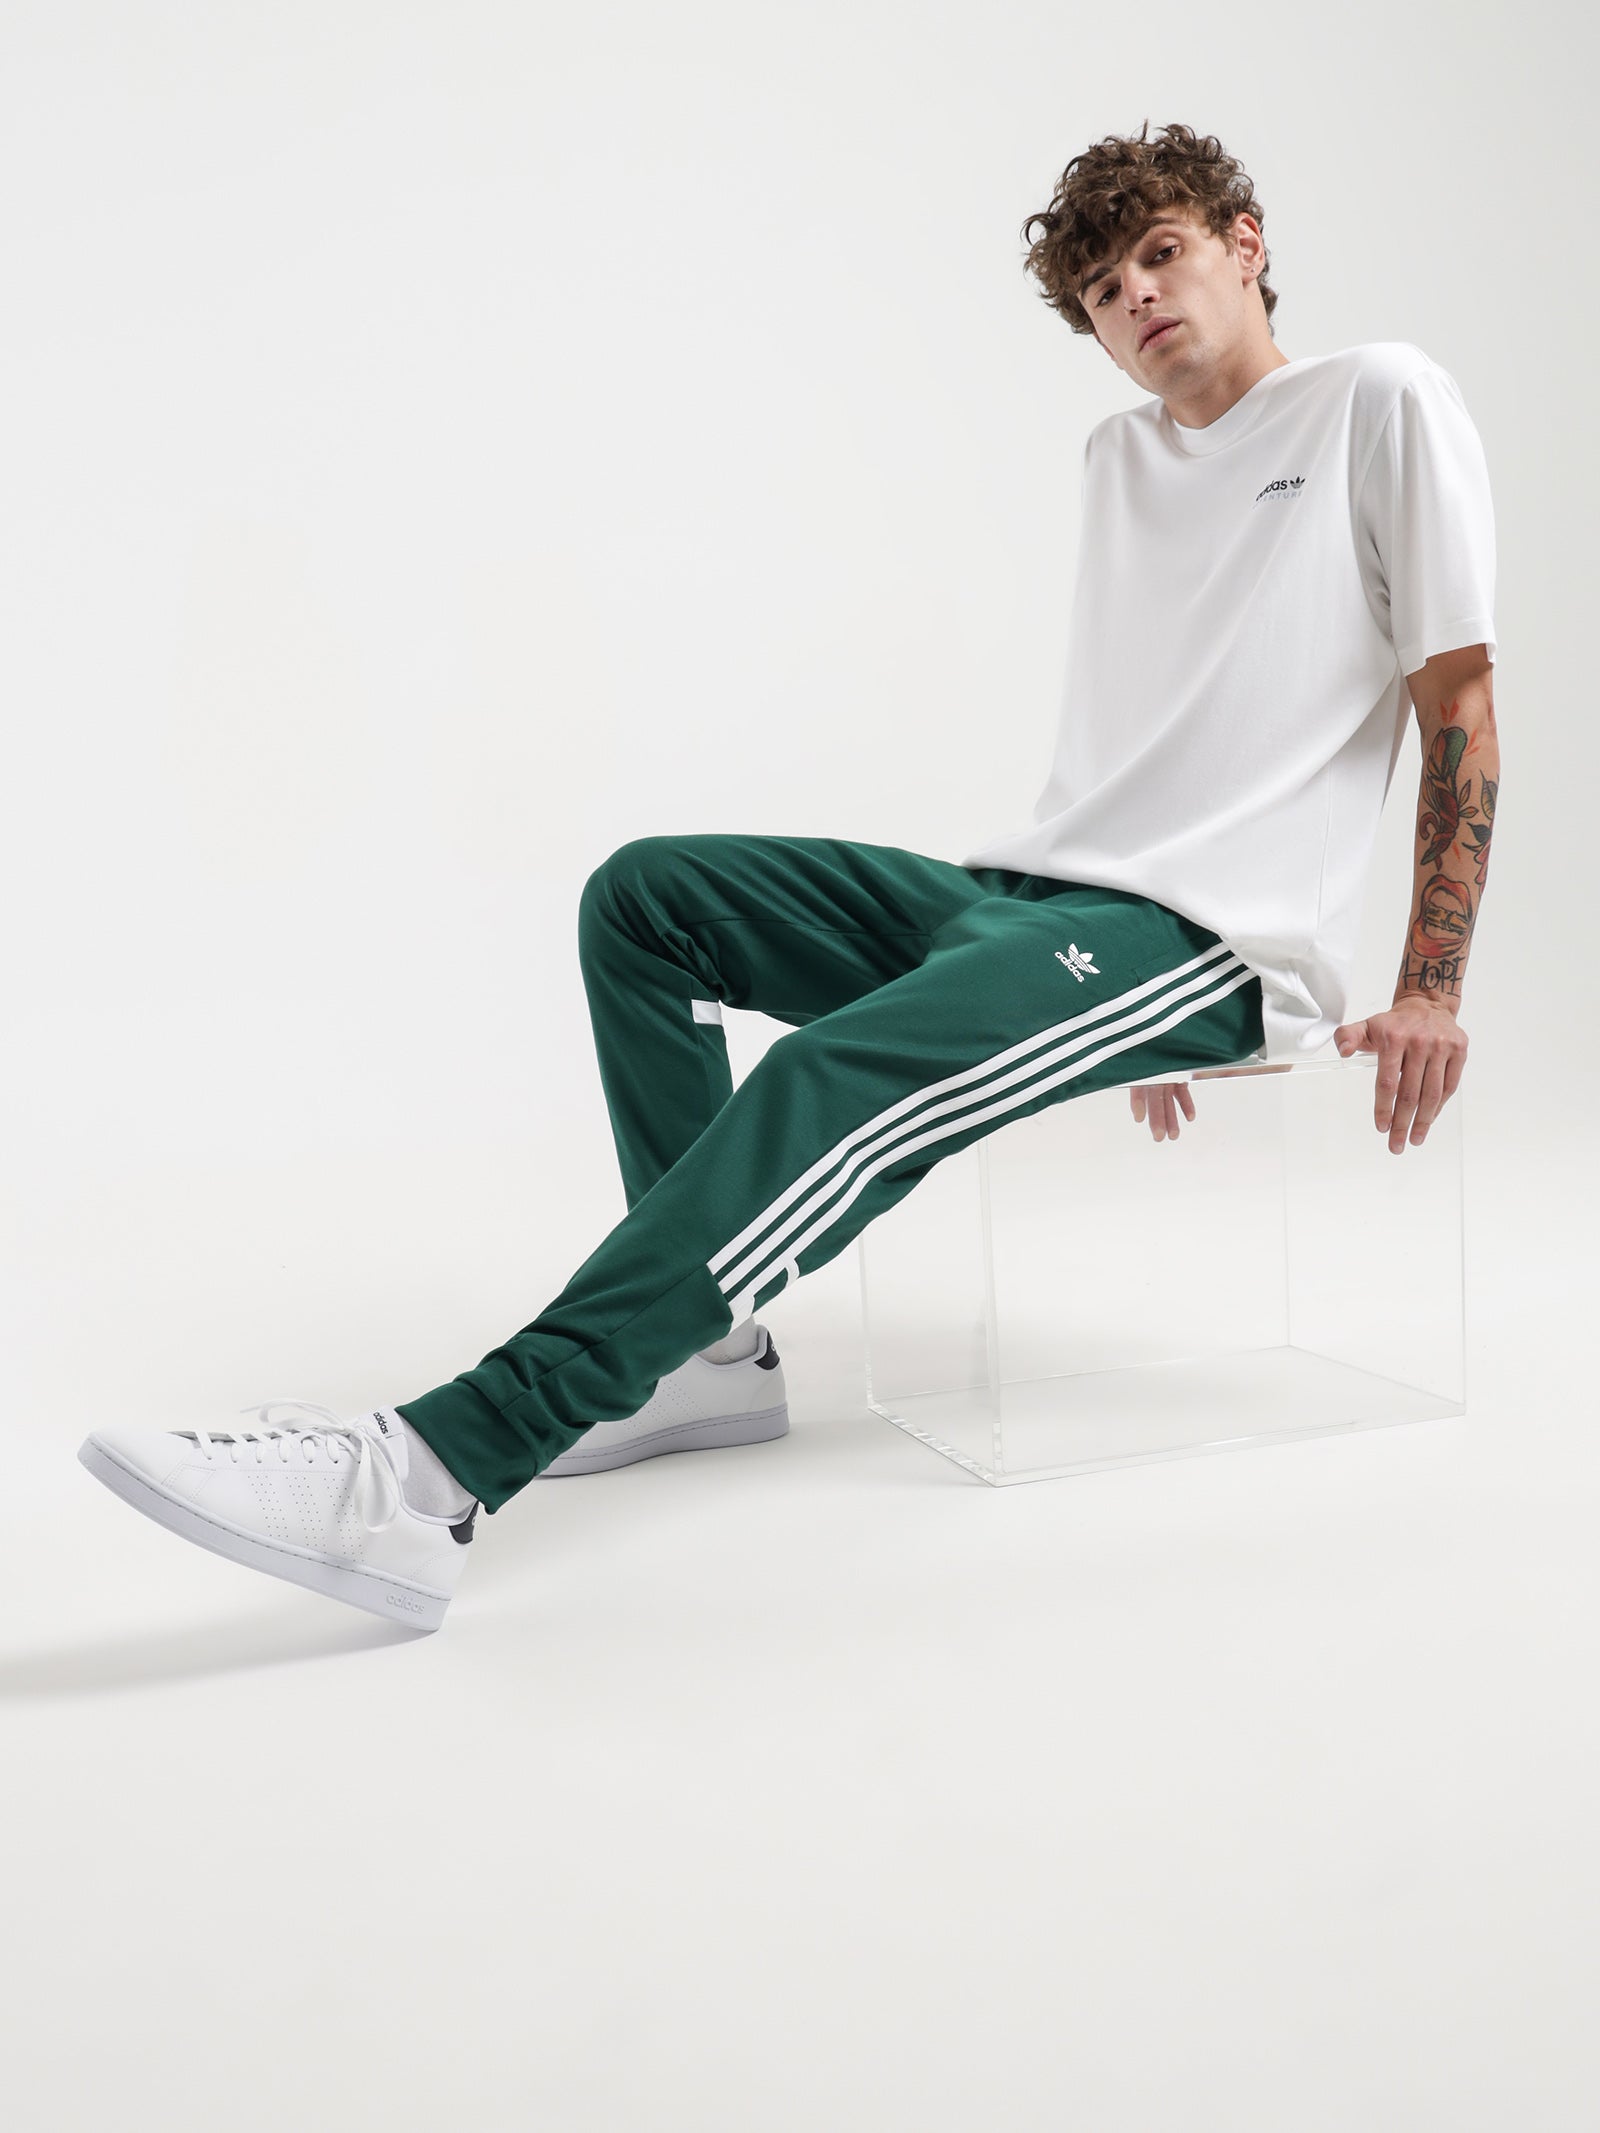 Adidas Originals Sweatshirt 'Adicolor Classics Cut Line' Male Size S